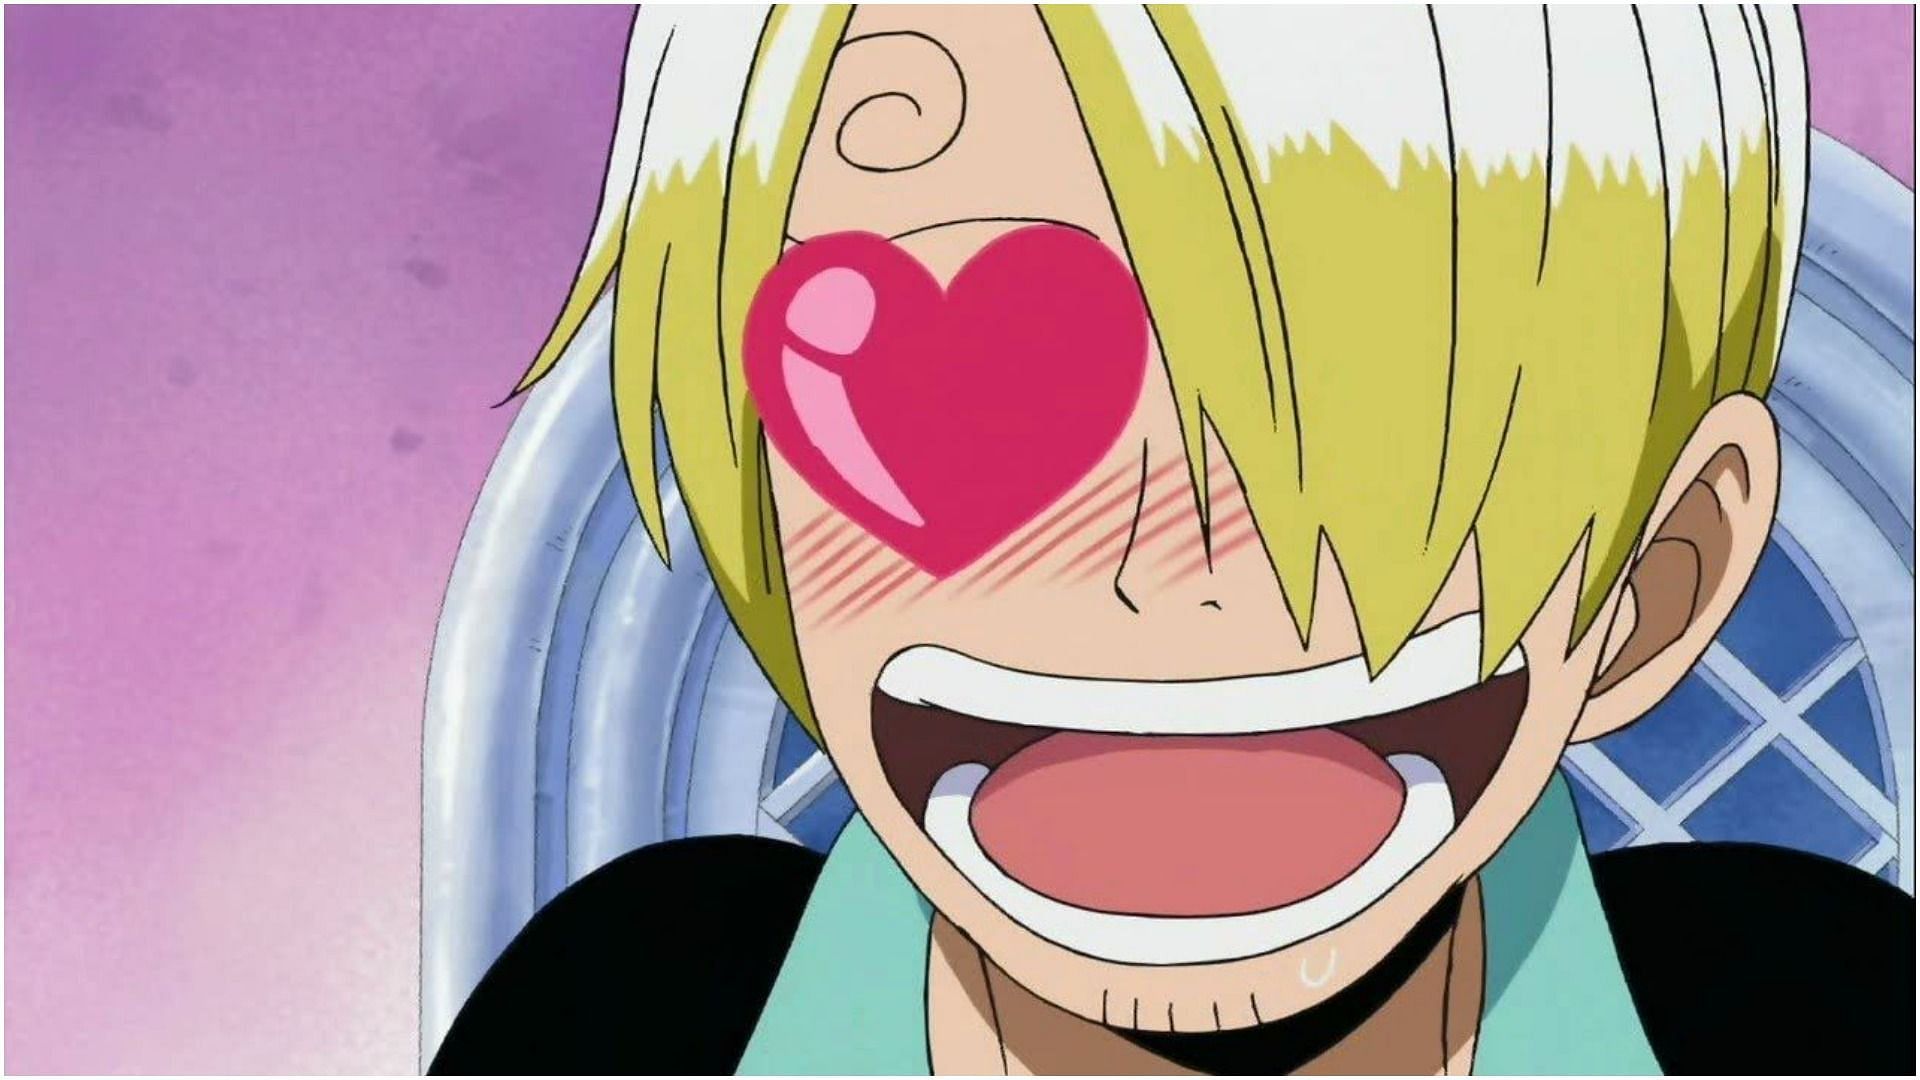 Vinsmoke Sanji as seen in the anime One Piece (Image via Toei Animation)